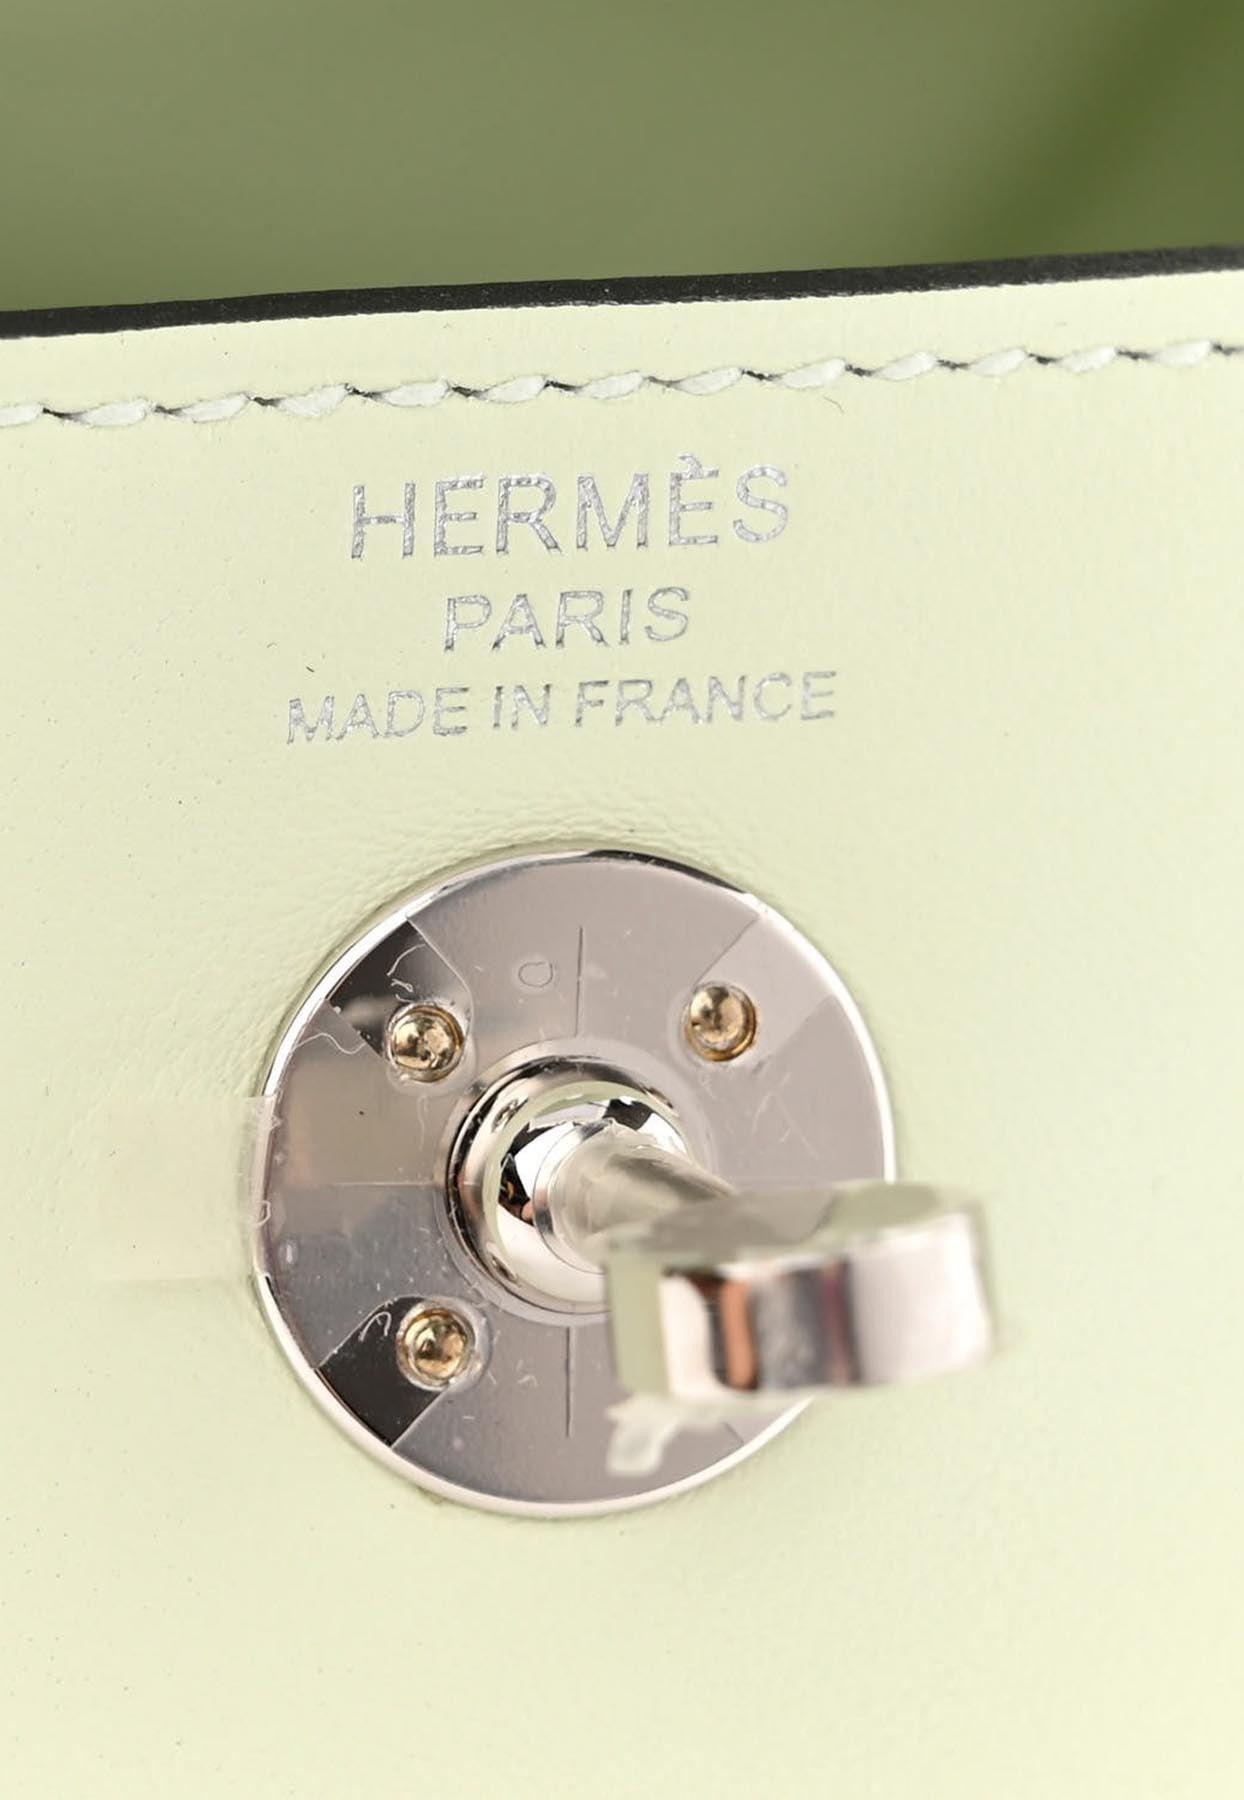 NIB Hermes Mini Lindy Bag - Vert Fizz Swift Leather w Palladium Hardware